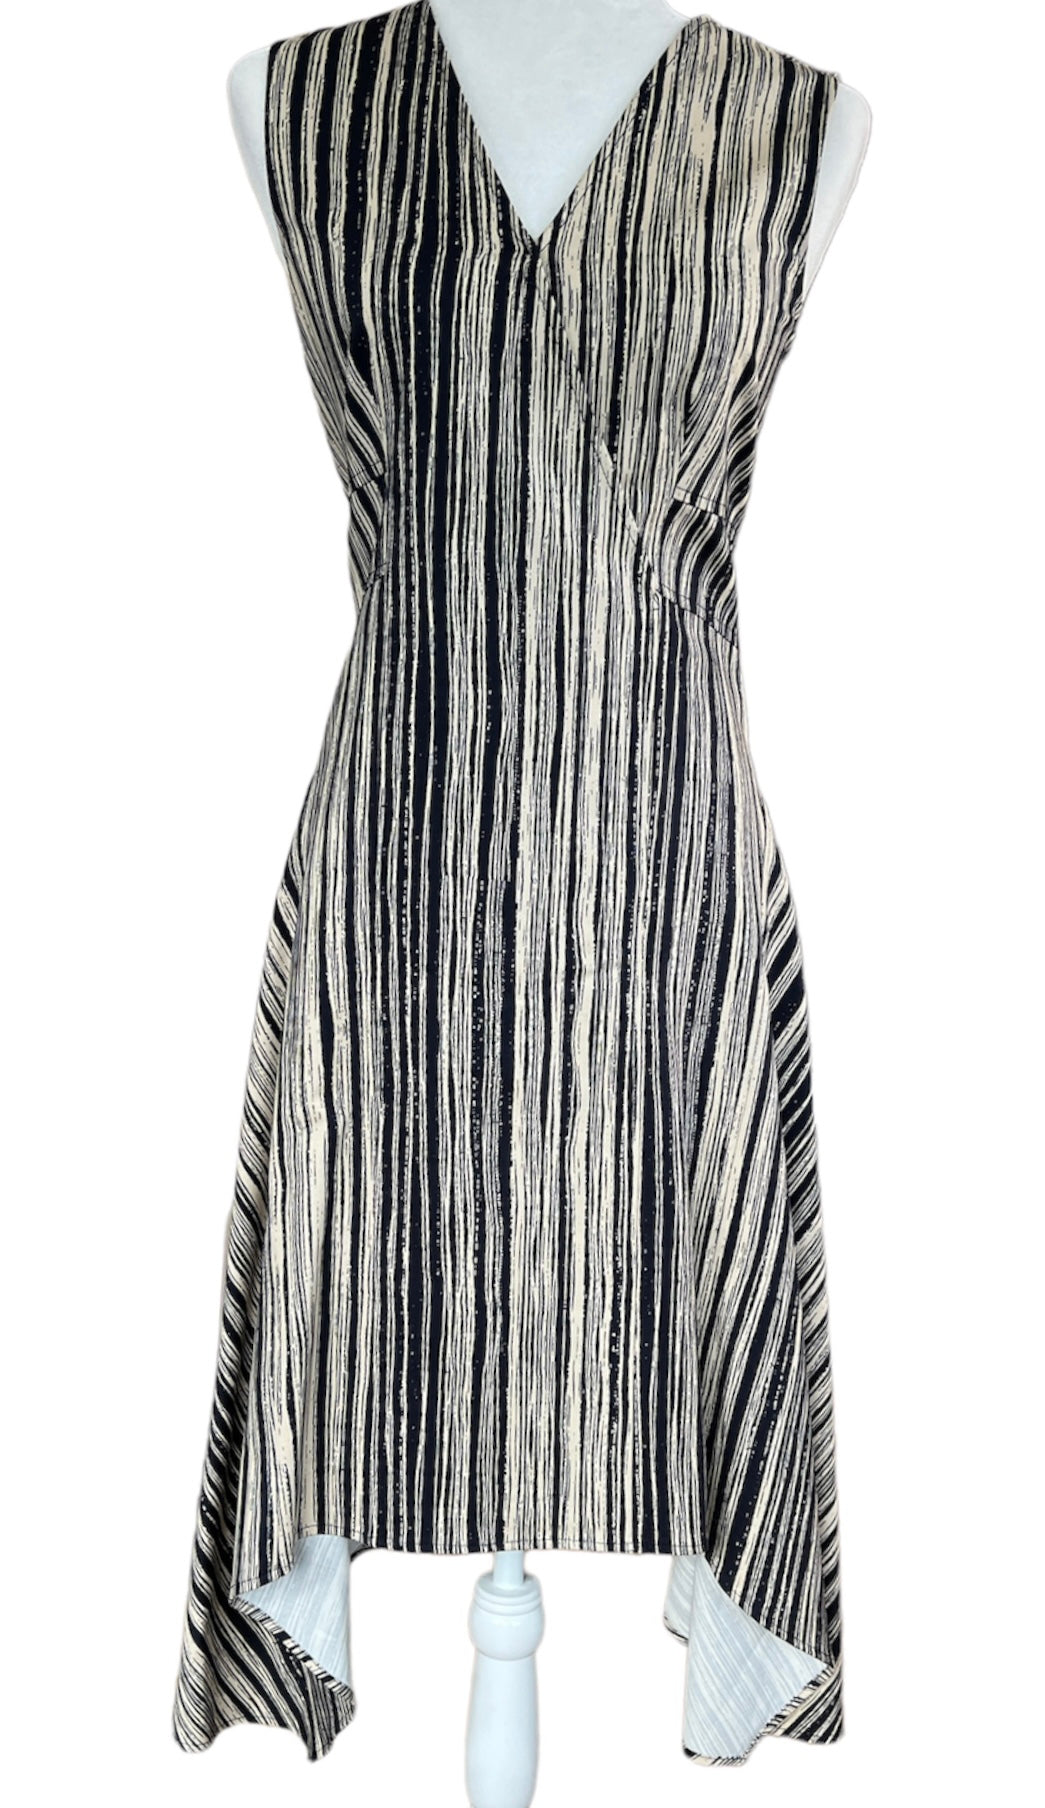 Donna Karan Navy/Tan Bark Stripe Print Dress, S/M